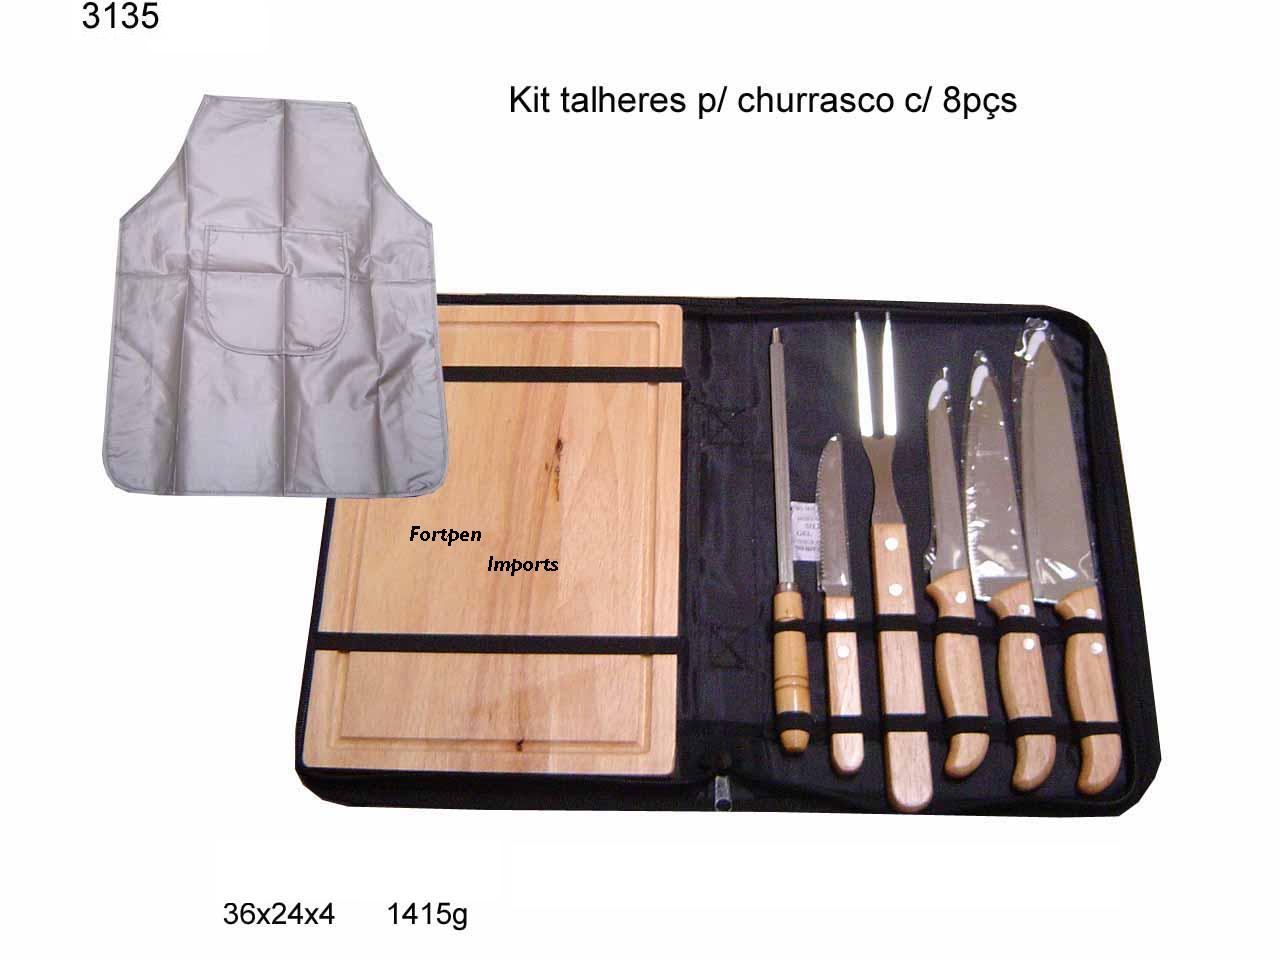 Kit talheres para churrasco com 6 pçs (3135)